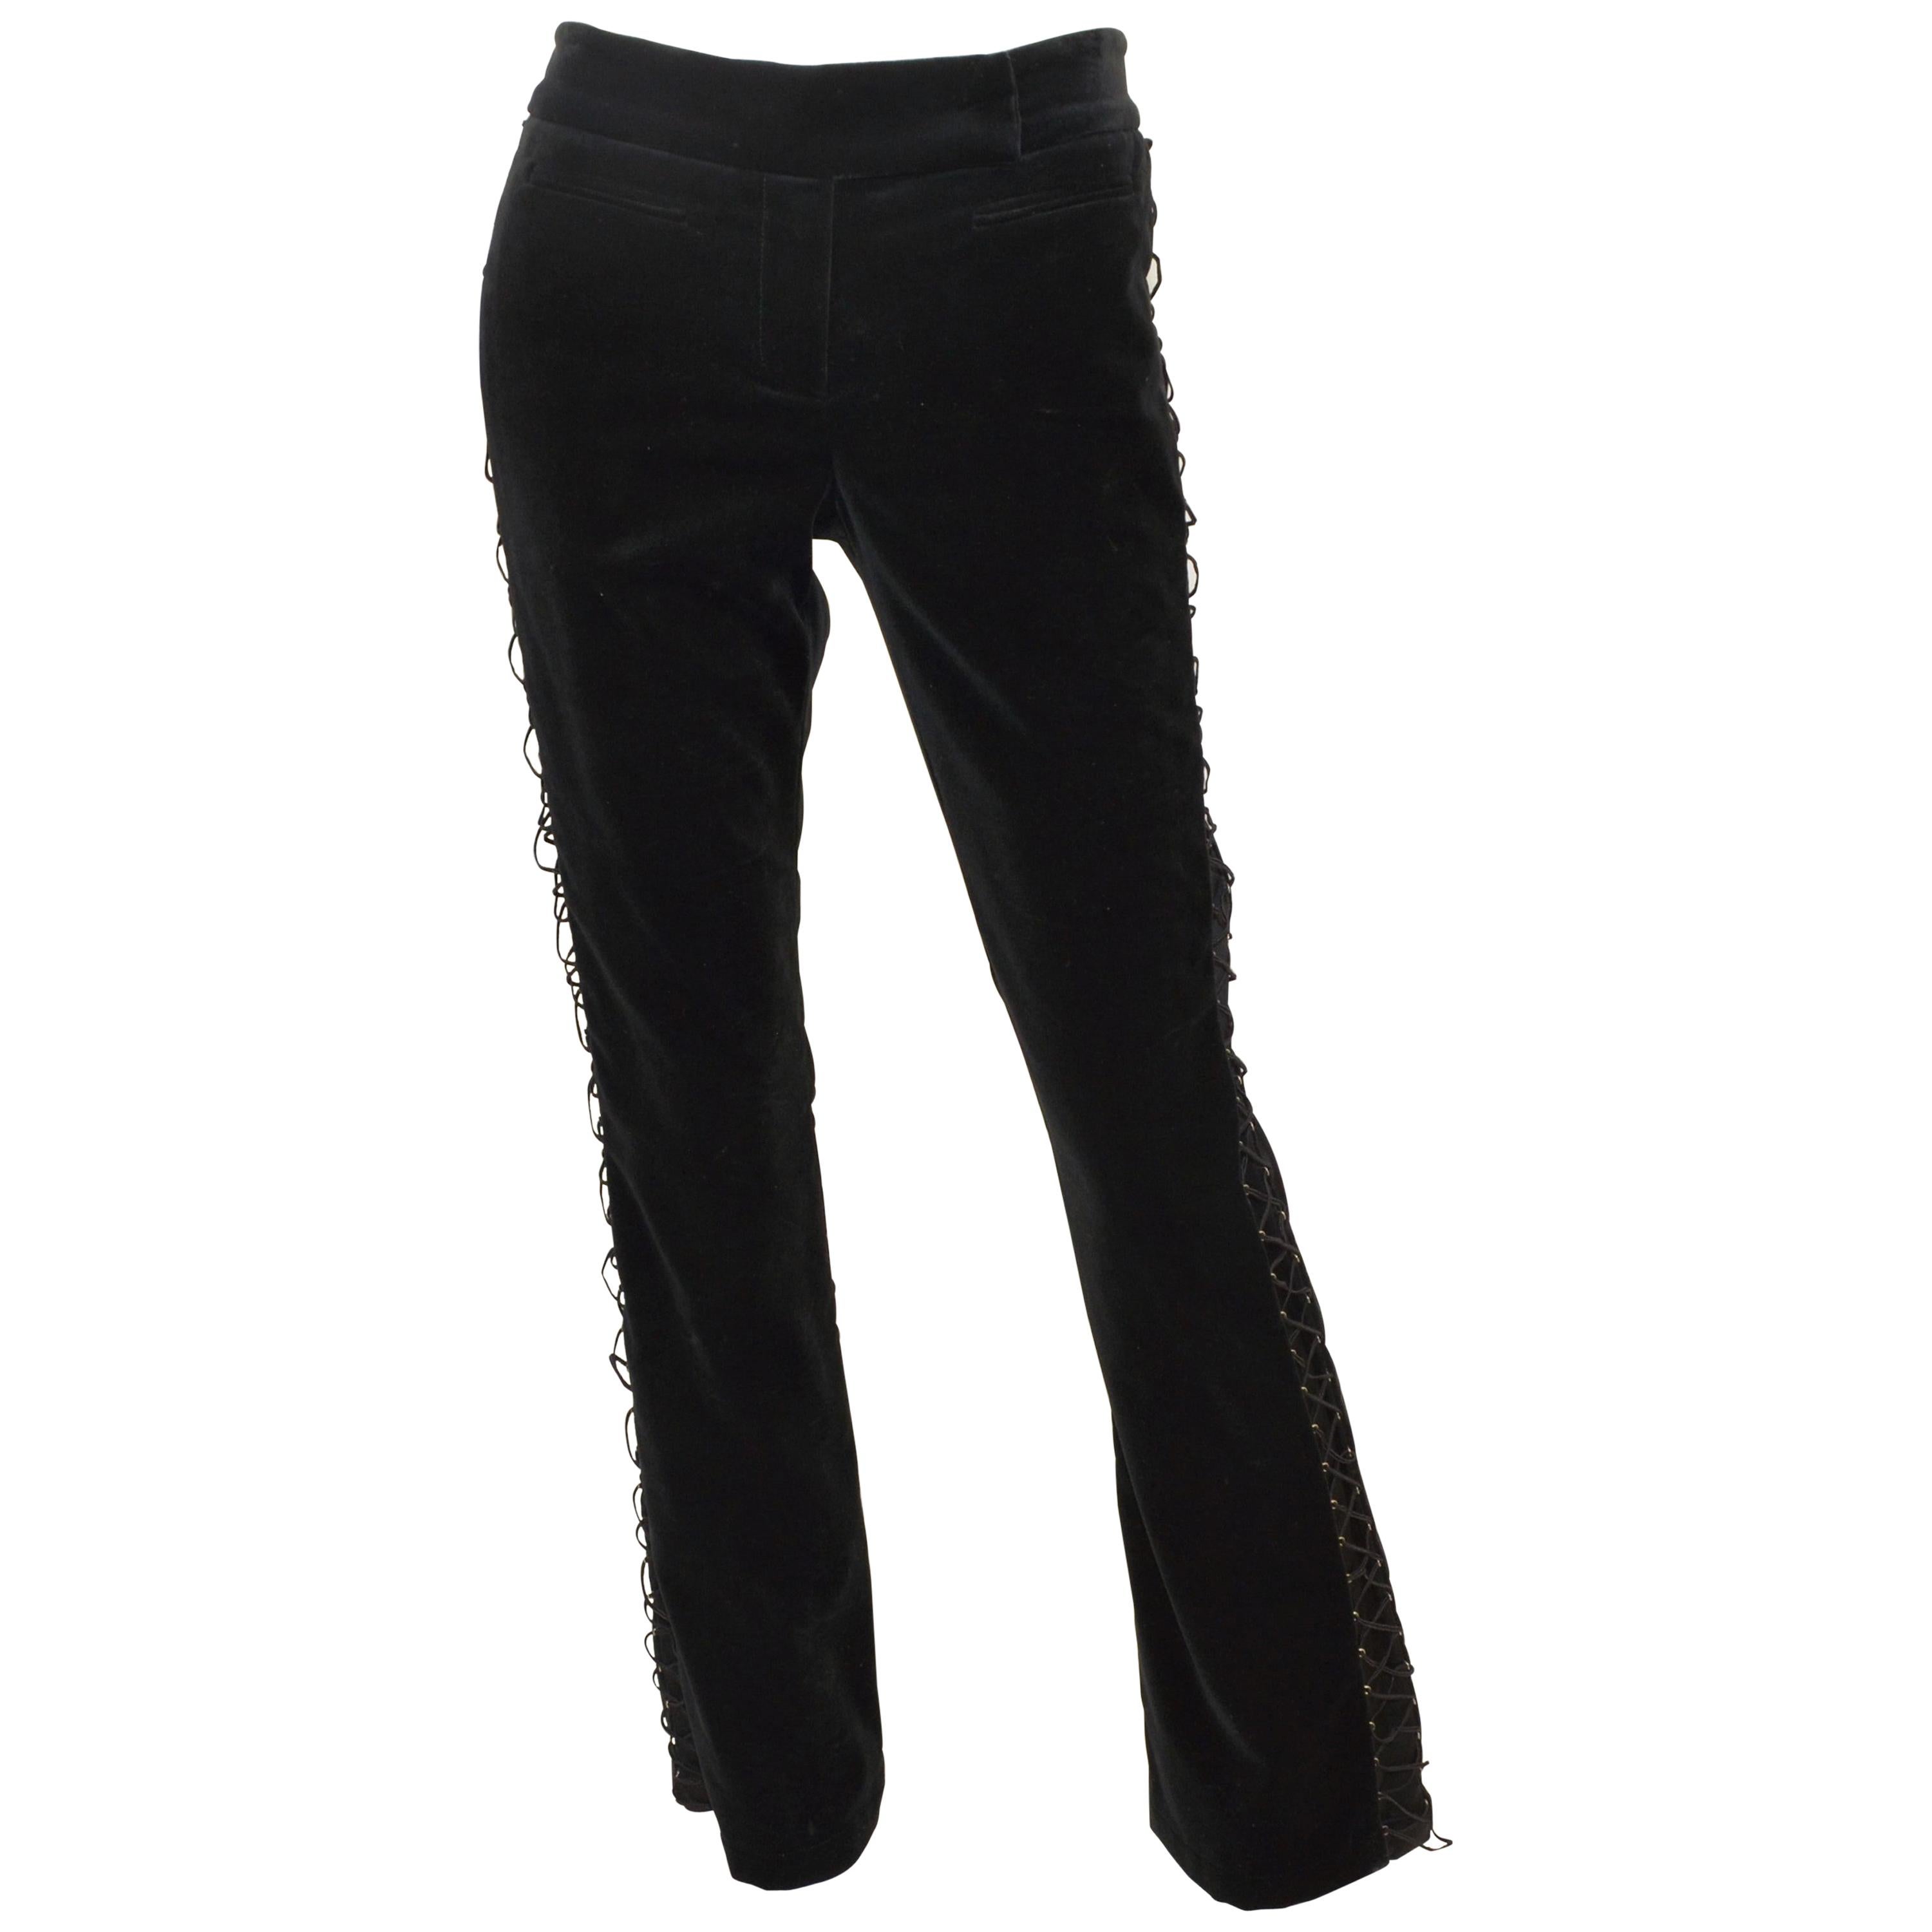 D&G by Dolce & Gabbana Black Velvet Lace-Up Pants